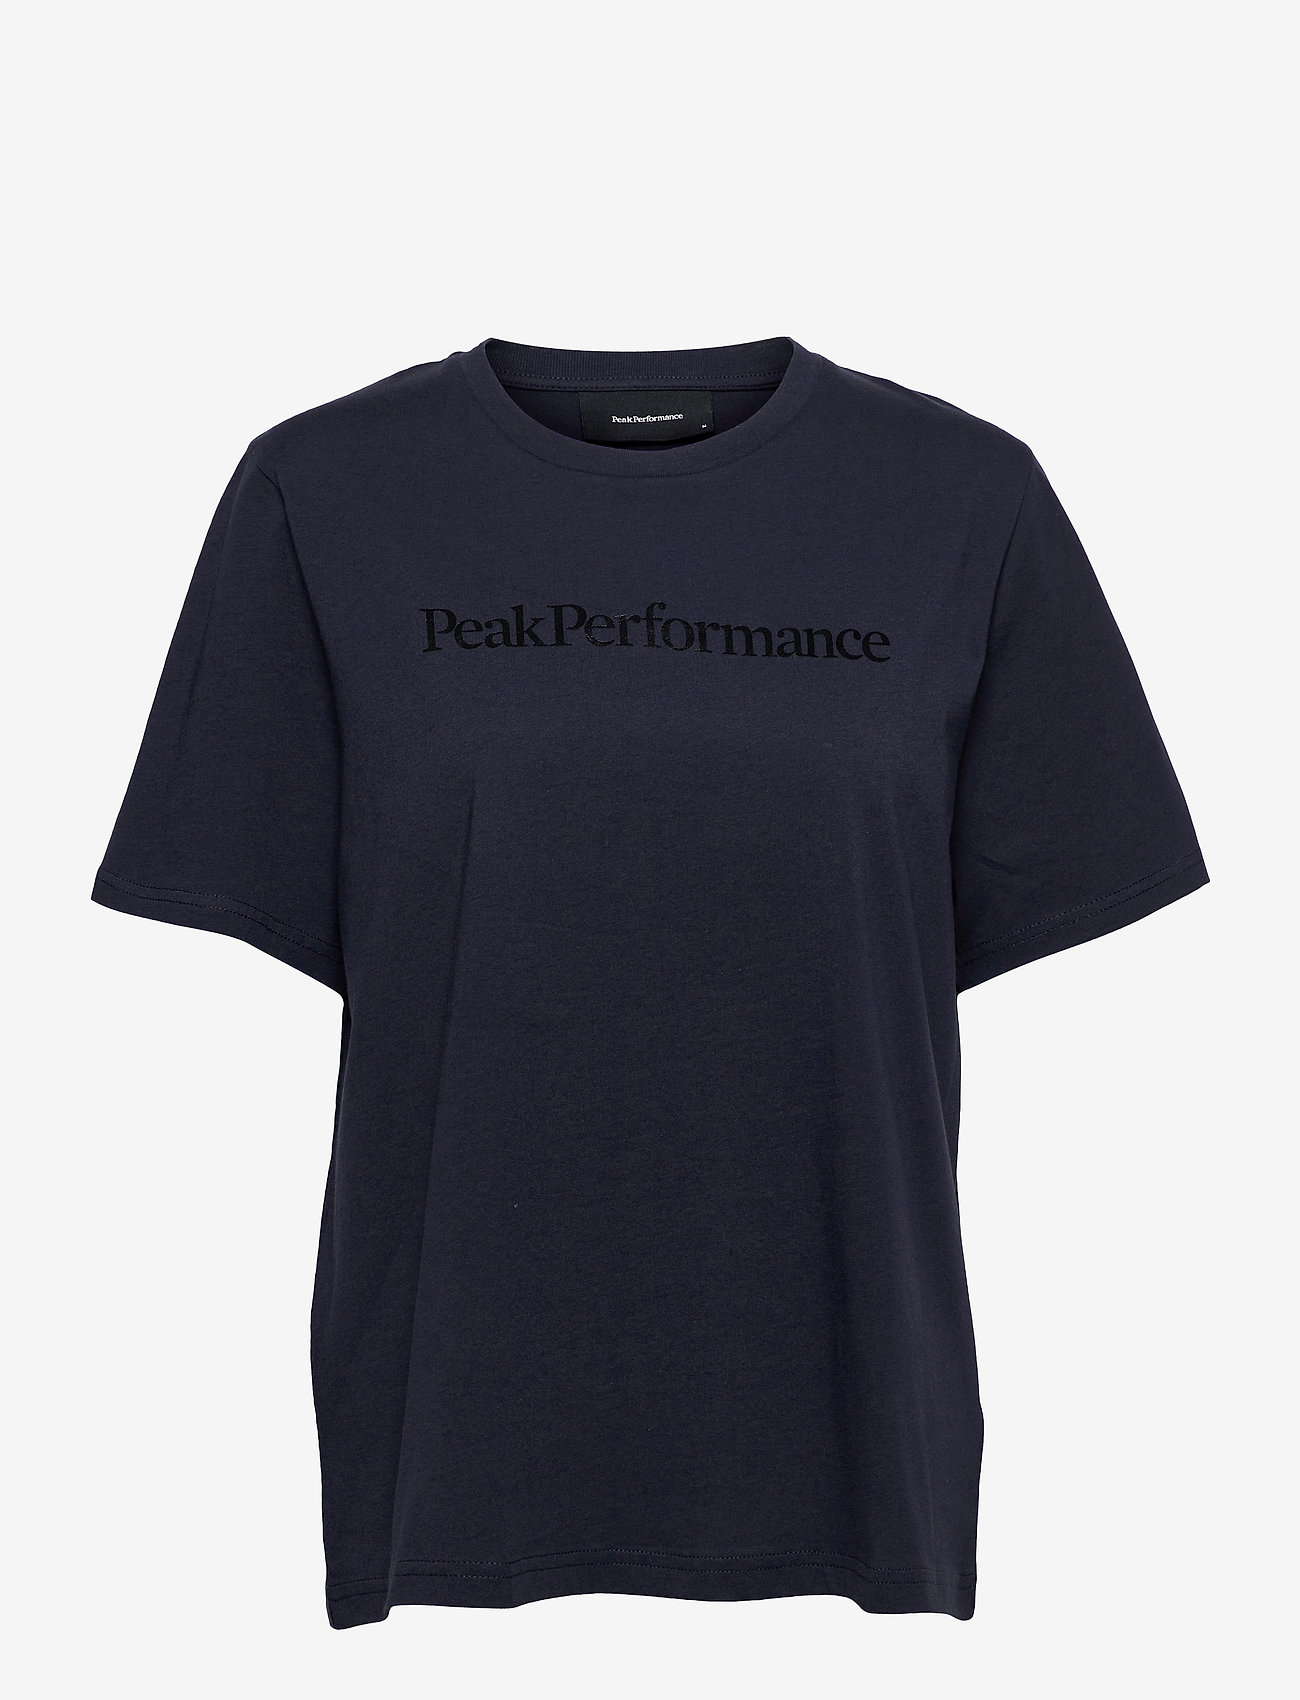 Peak Performance - W Original Seasonal Tee - blue shadow - 0